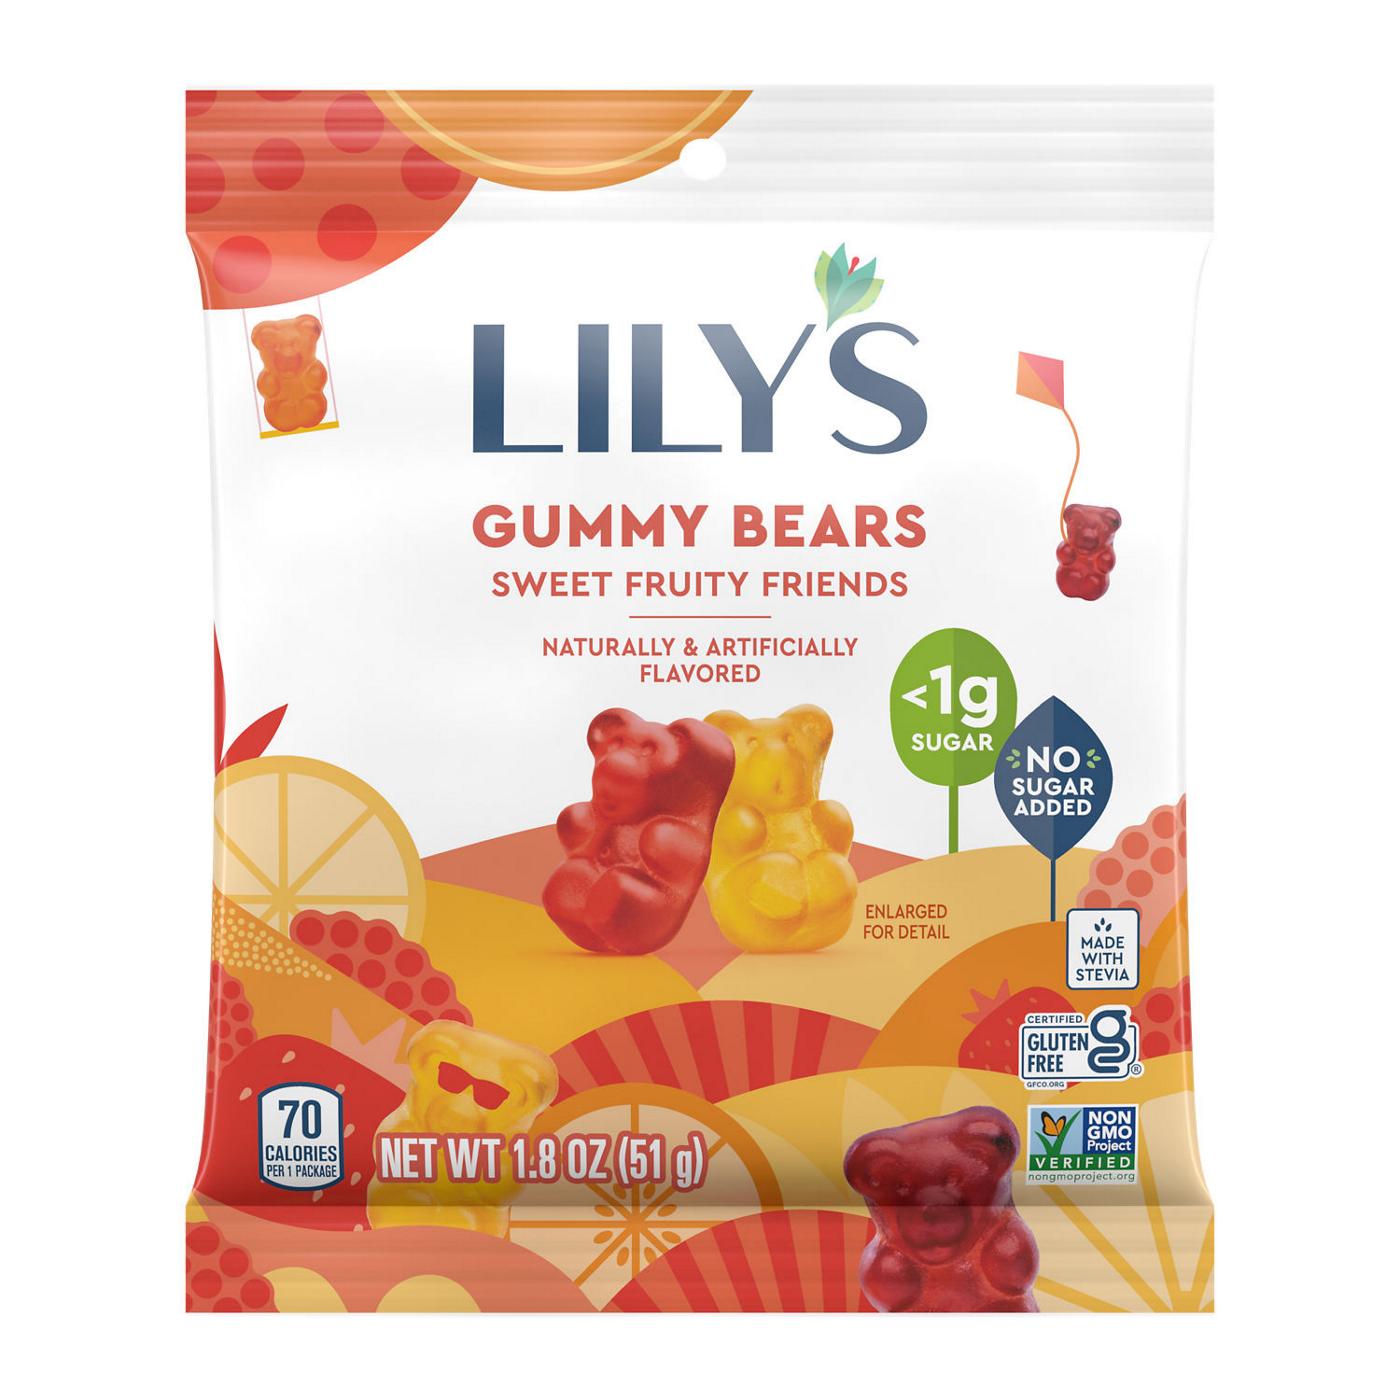 Lily's Sweet Fruity Friends Gummy Bears; image 1 of 6